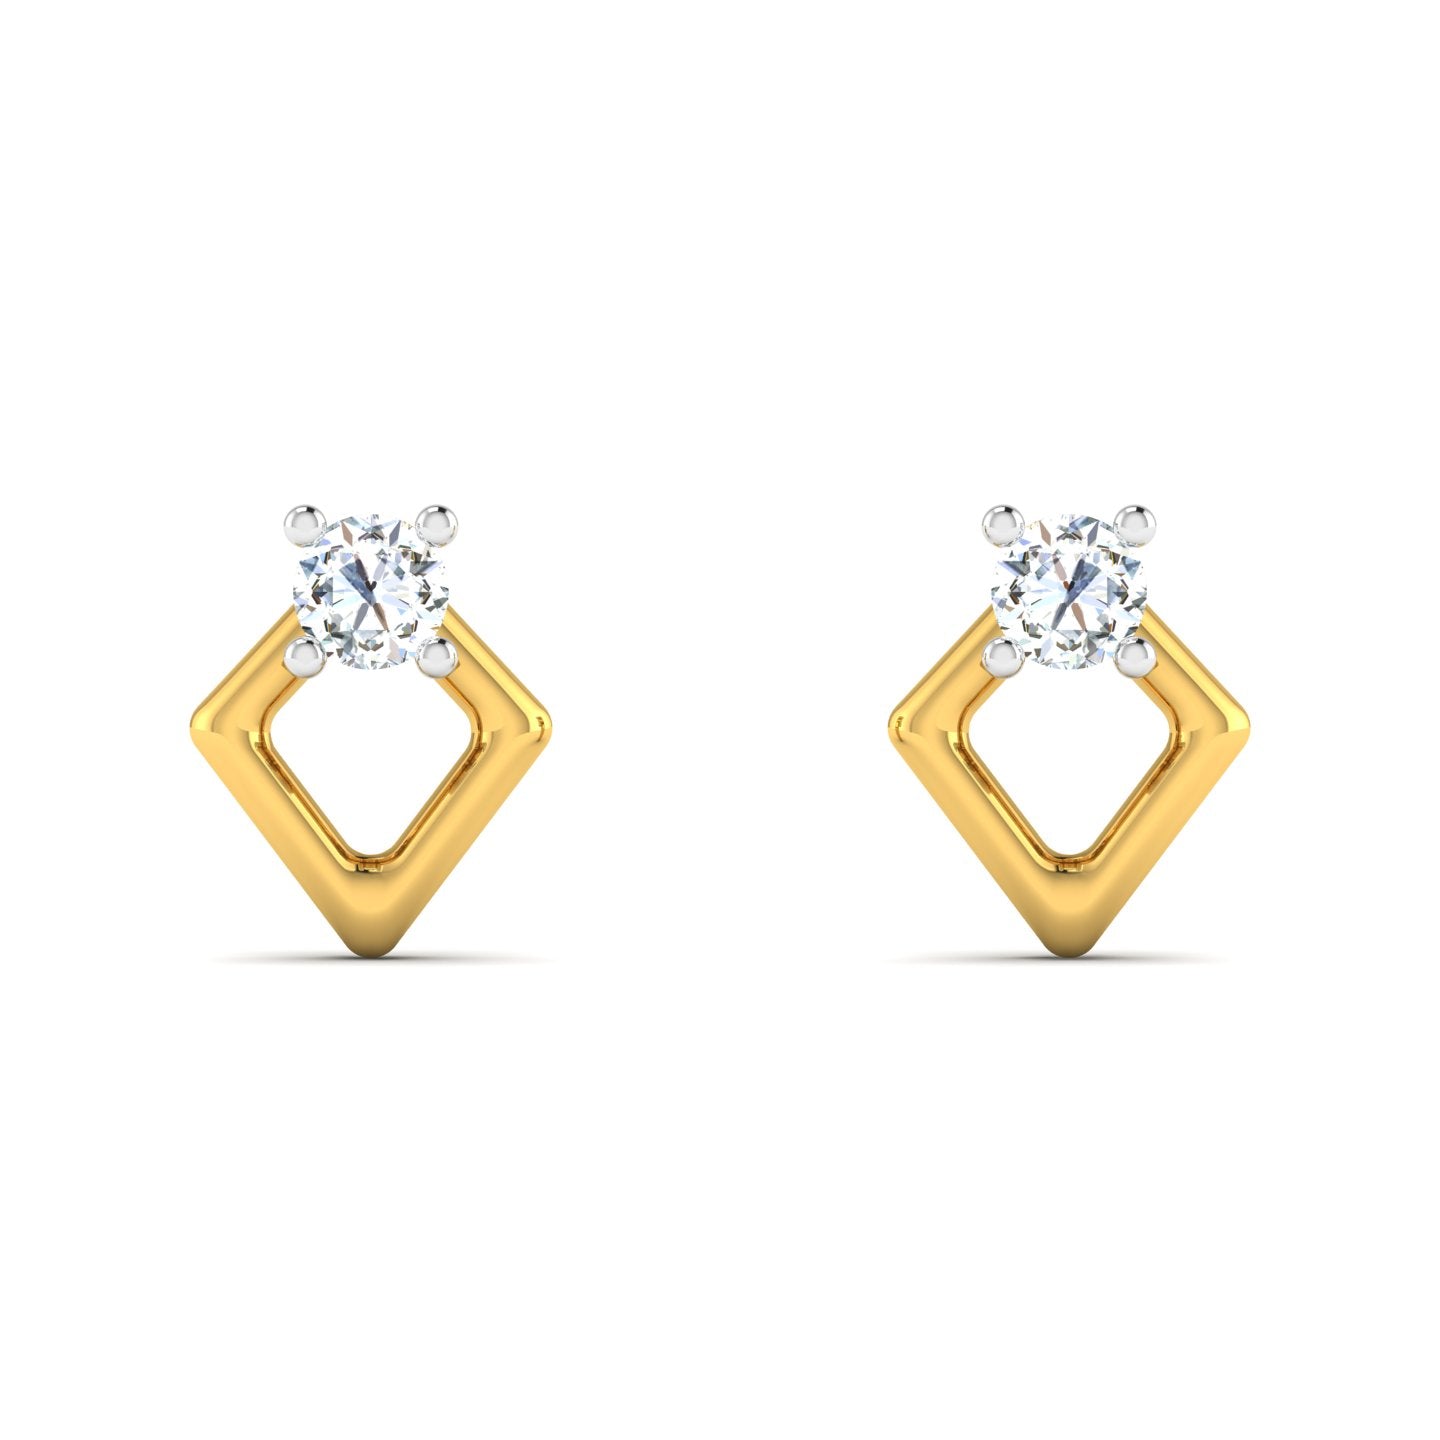 Elliana's Love Diamond Earring